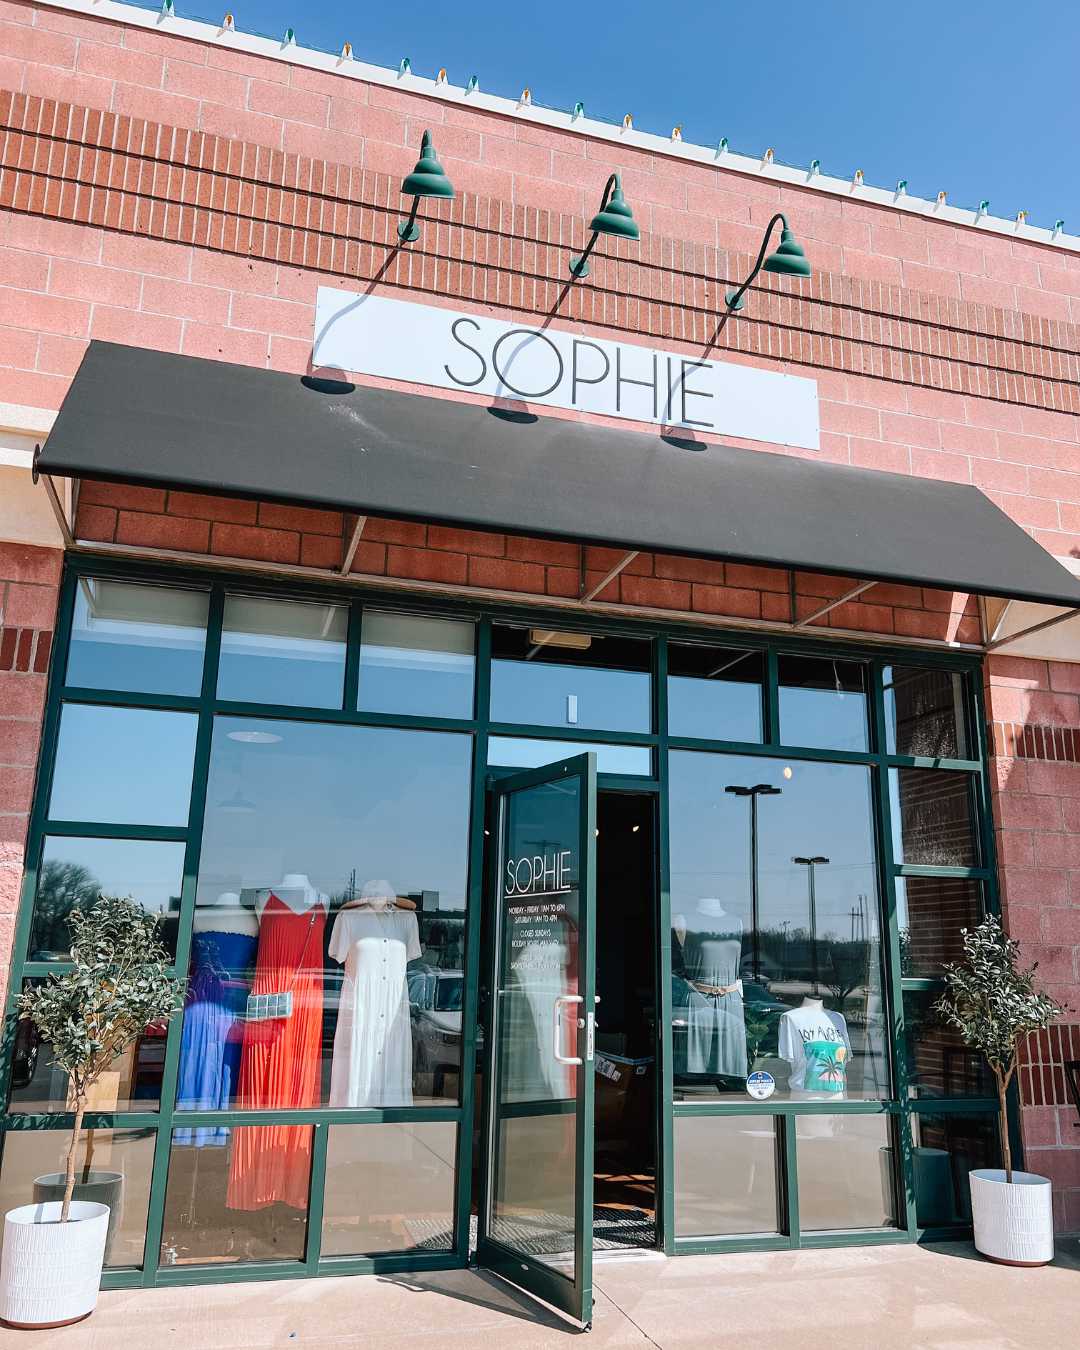 Visit the Sophie storefront in Joplin, MO